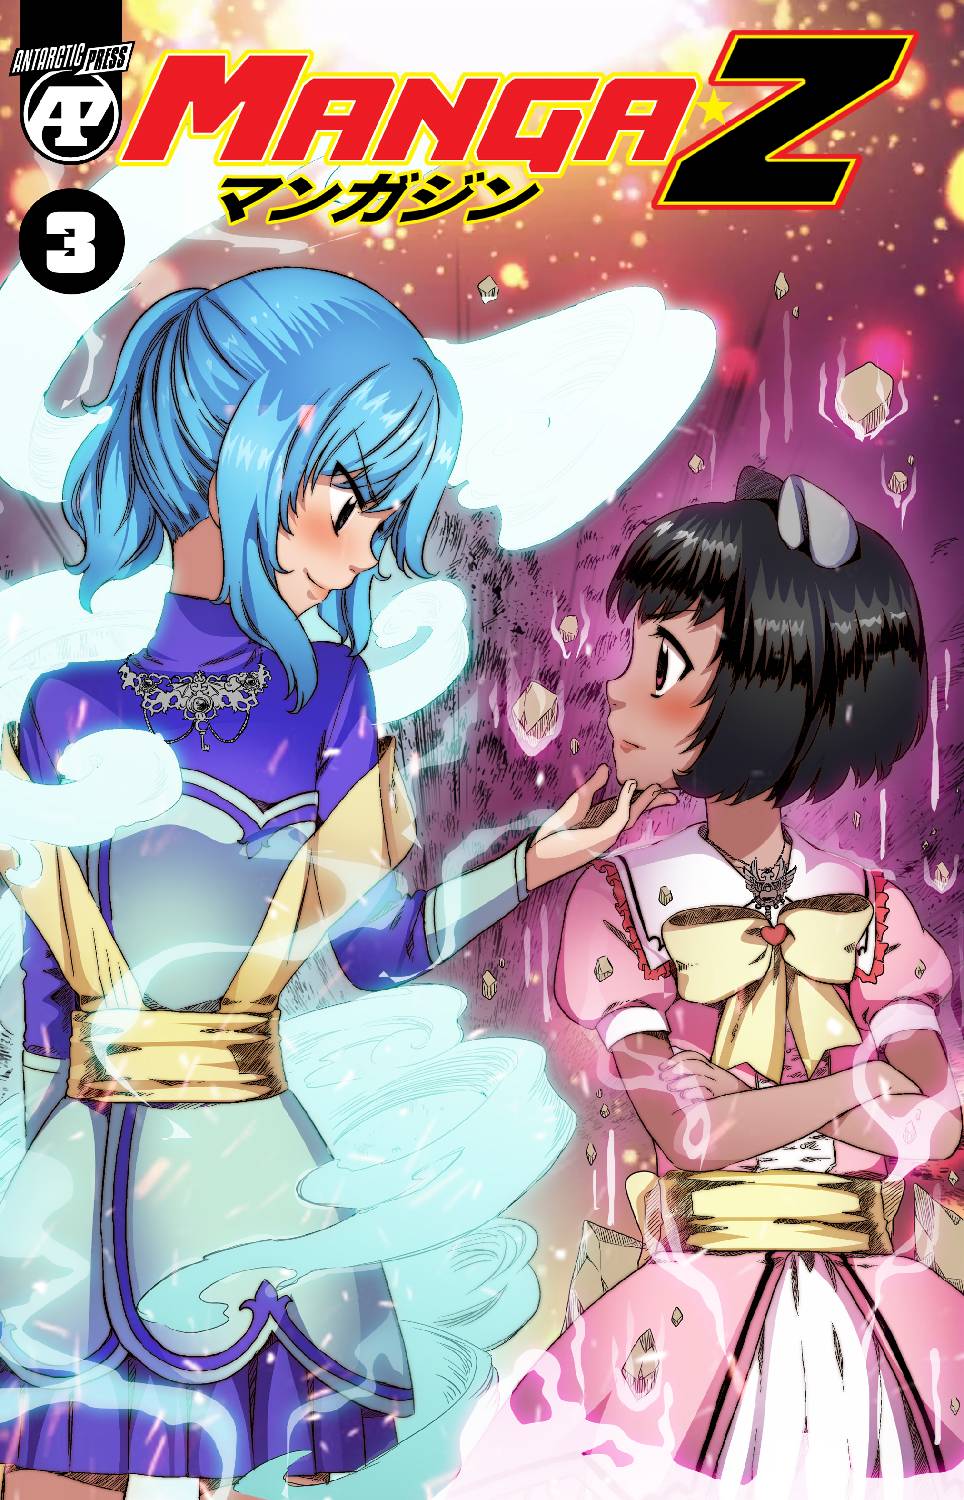 Manga Z no. 3 (2022 Series)